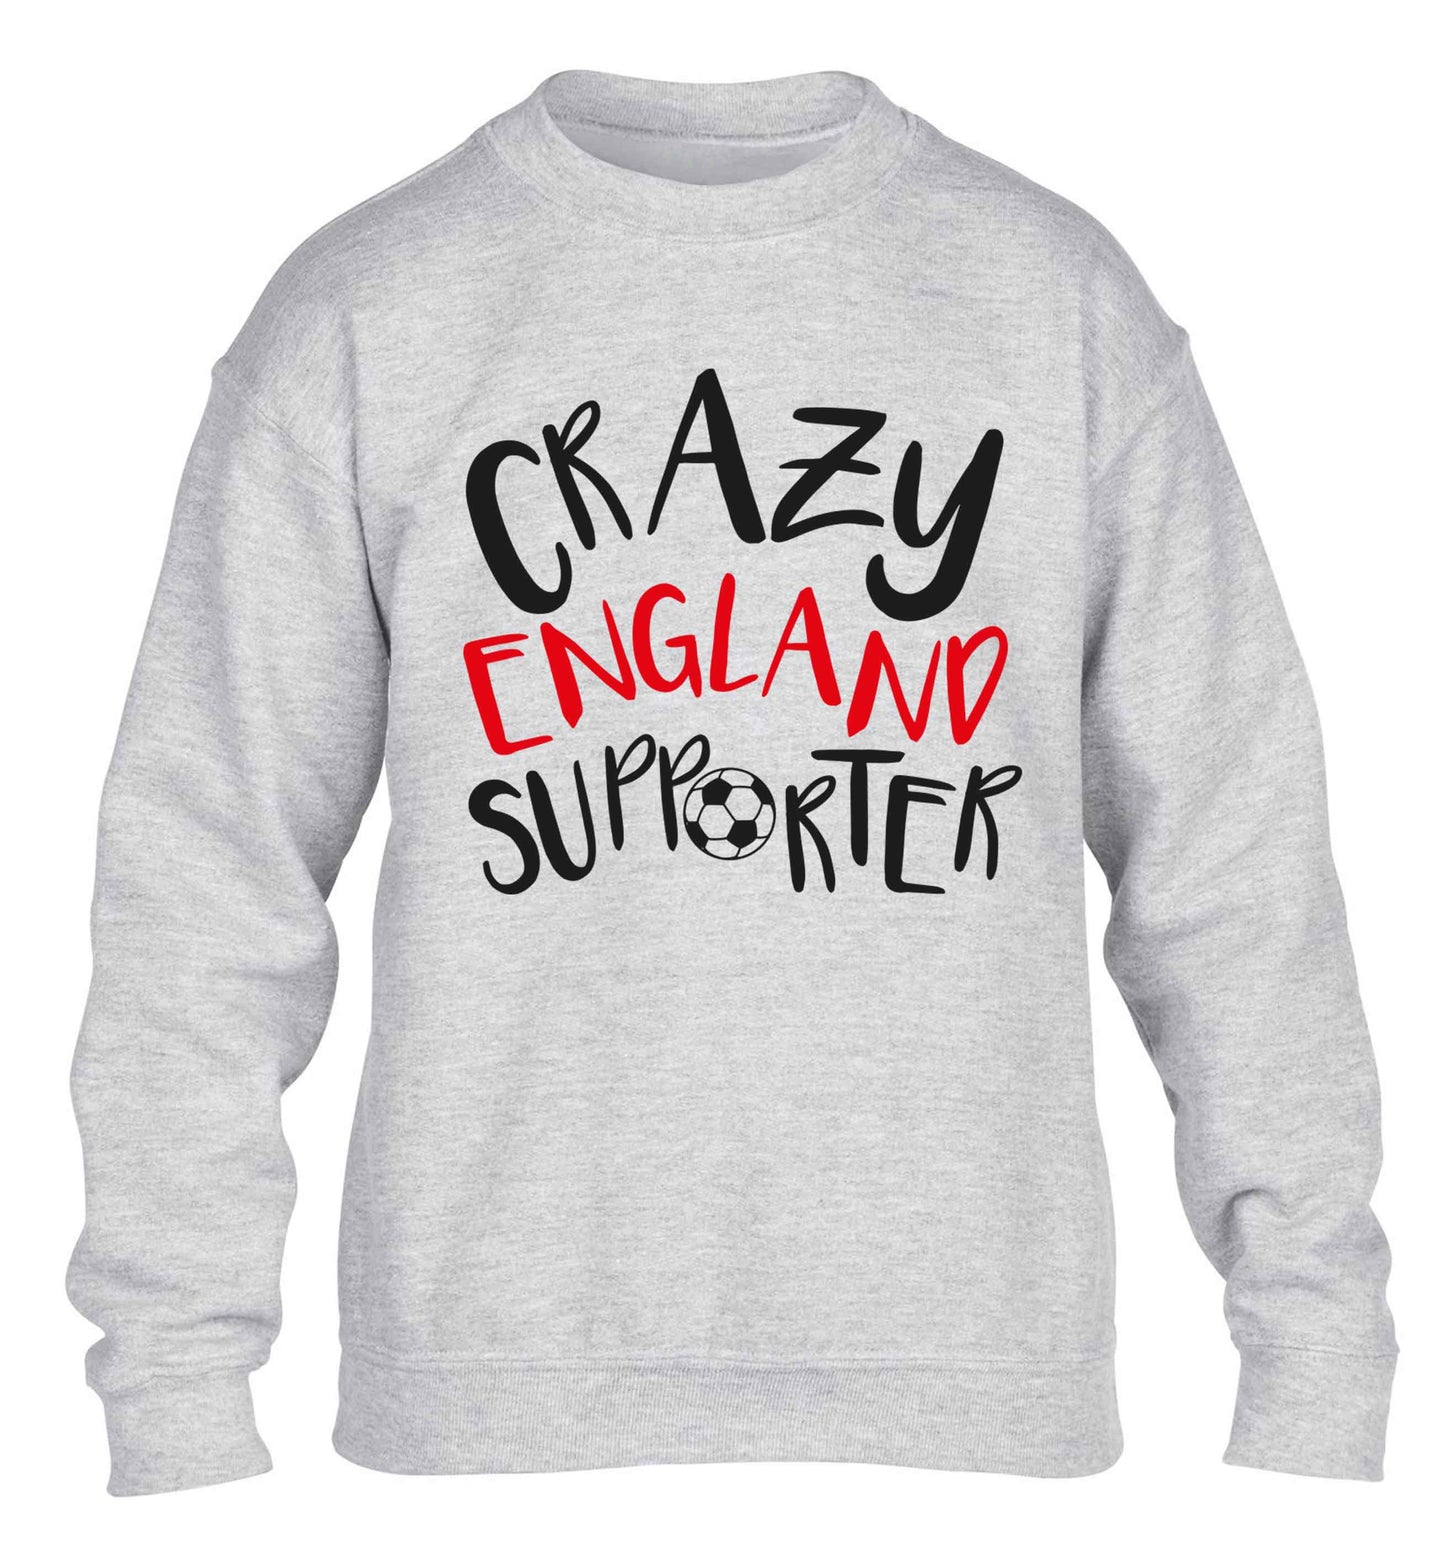 Crazy England supporter children's grey sweater 12-13 Years